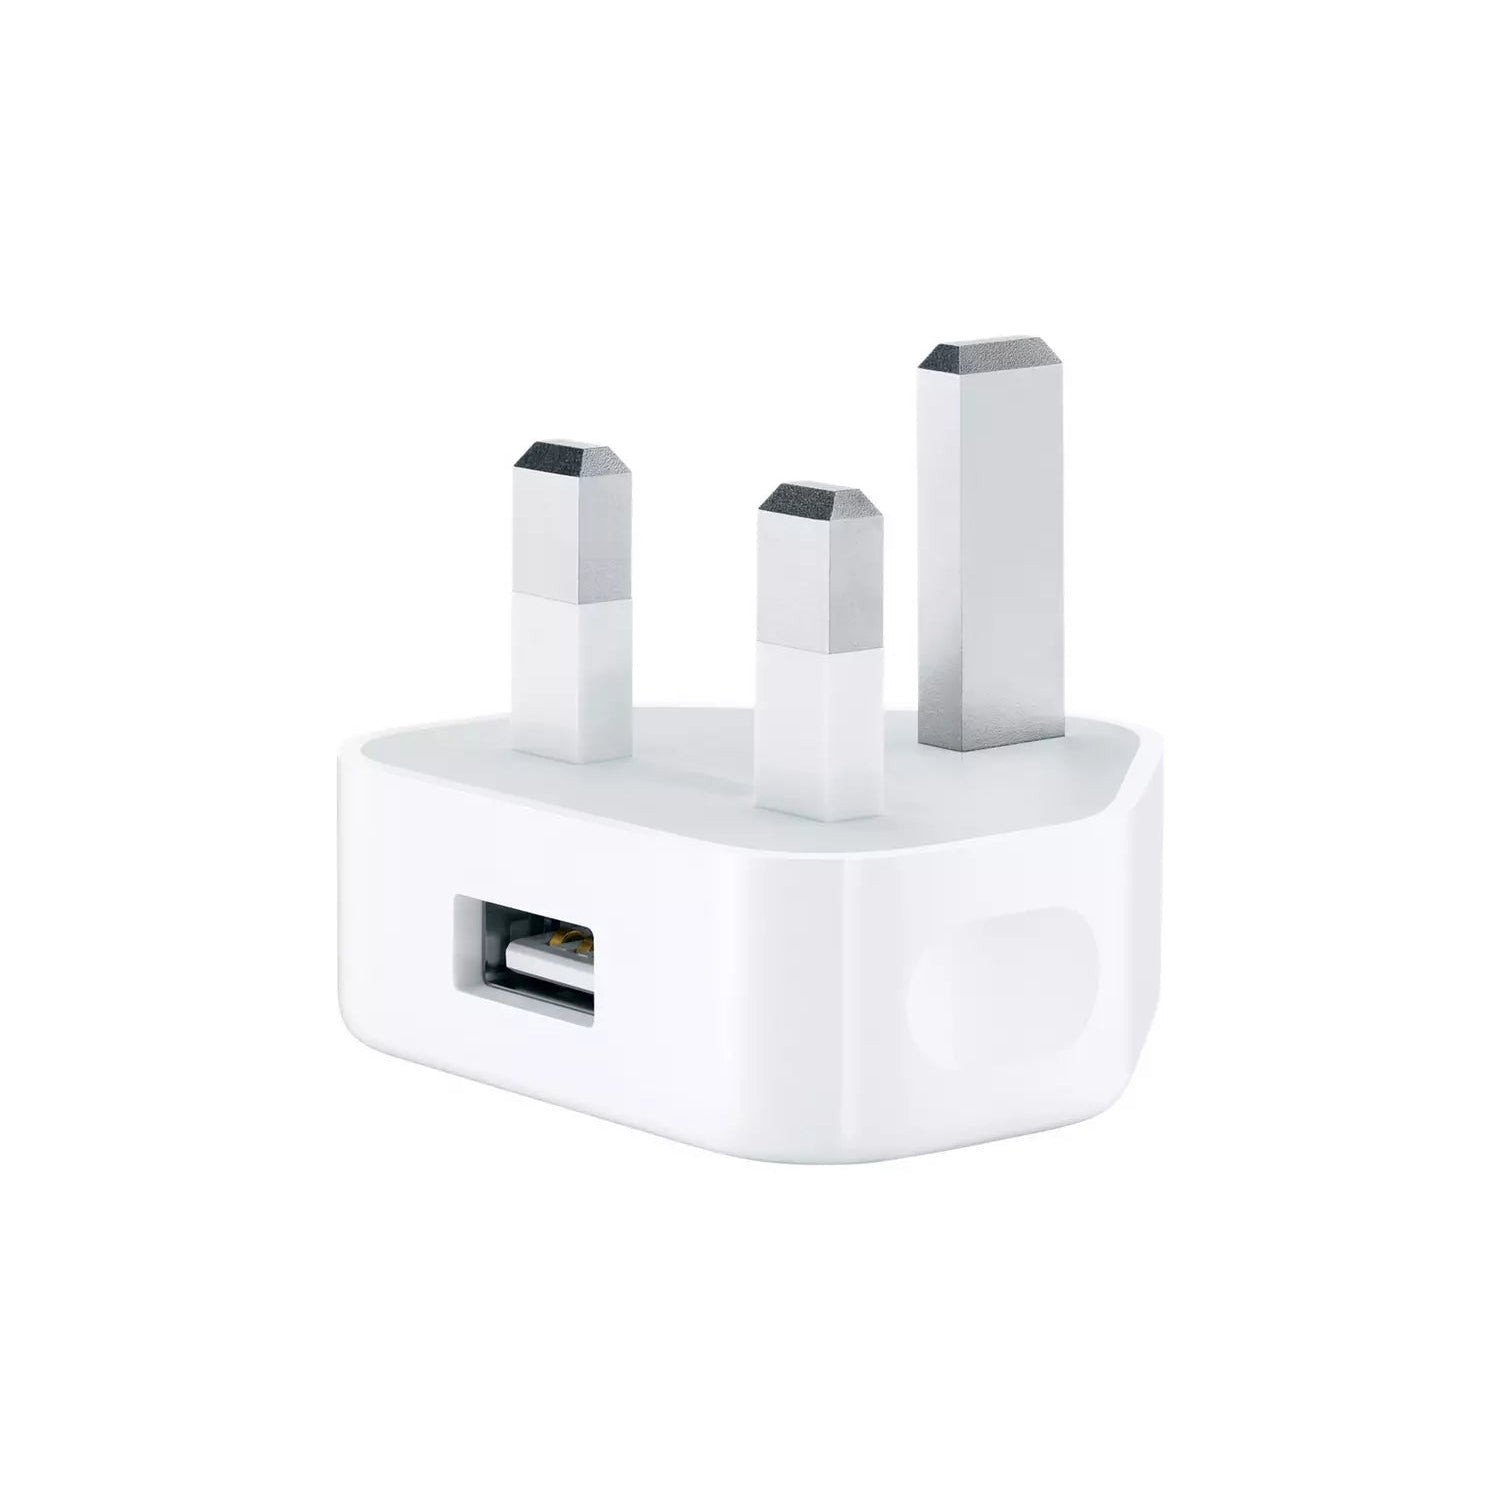 Apple 5W USB Power Adapter - MD812B/C - Refurbished Pristine